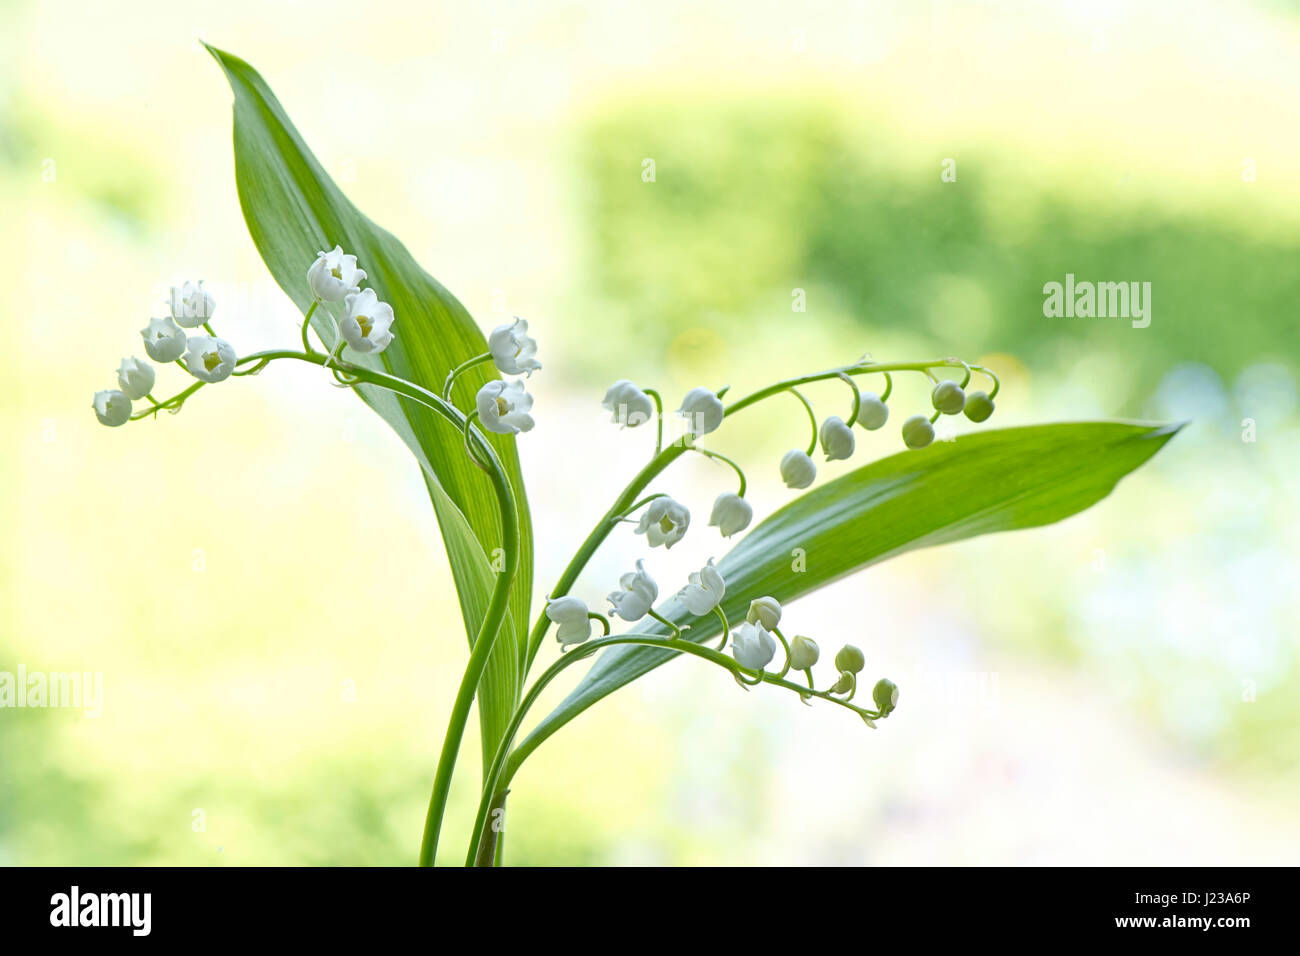 Nahaufnahme der zart, Frühling blühenden Maiglöckchen glockenförmigen Blüten auch bekannt als Convallariaarten Majalis. Stockfoto